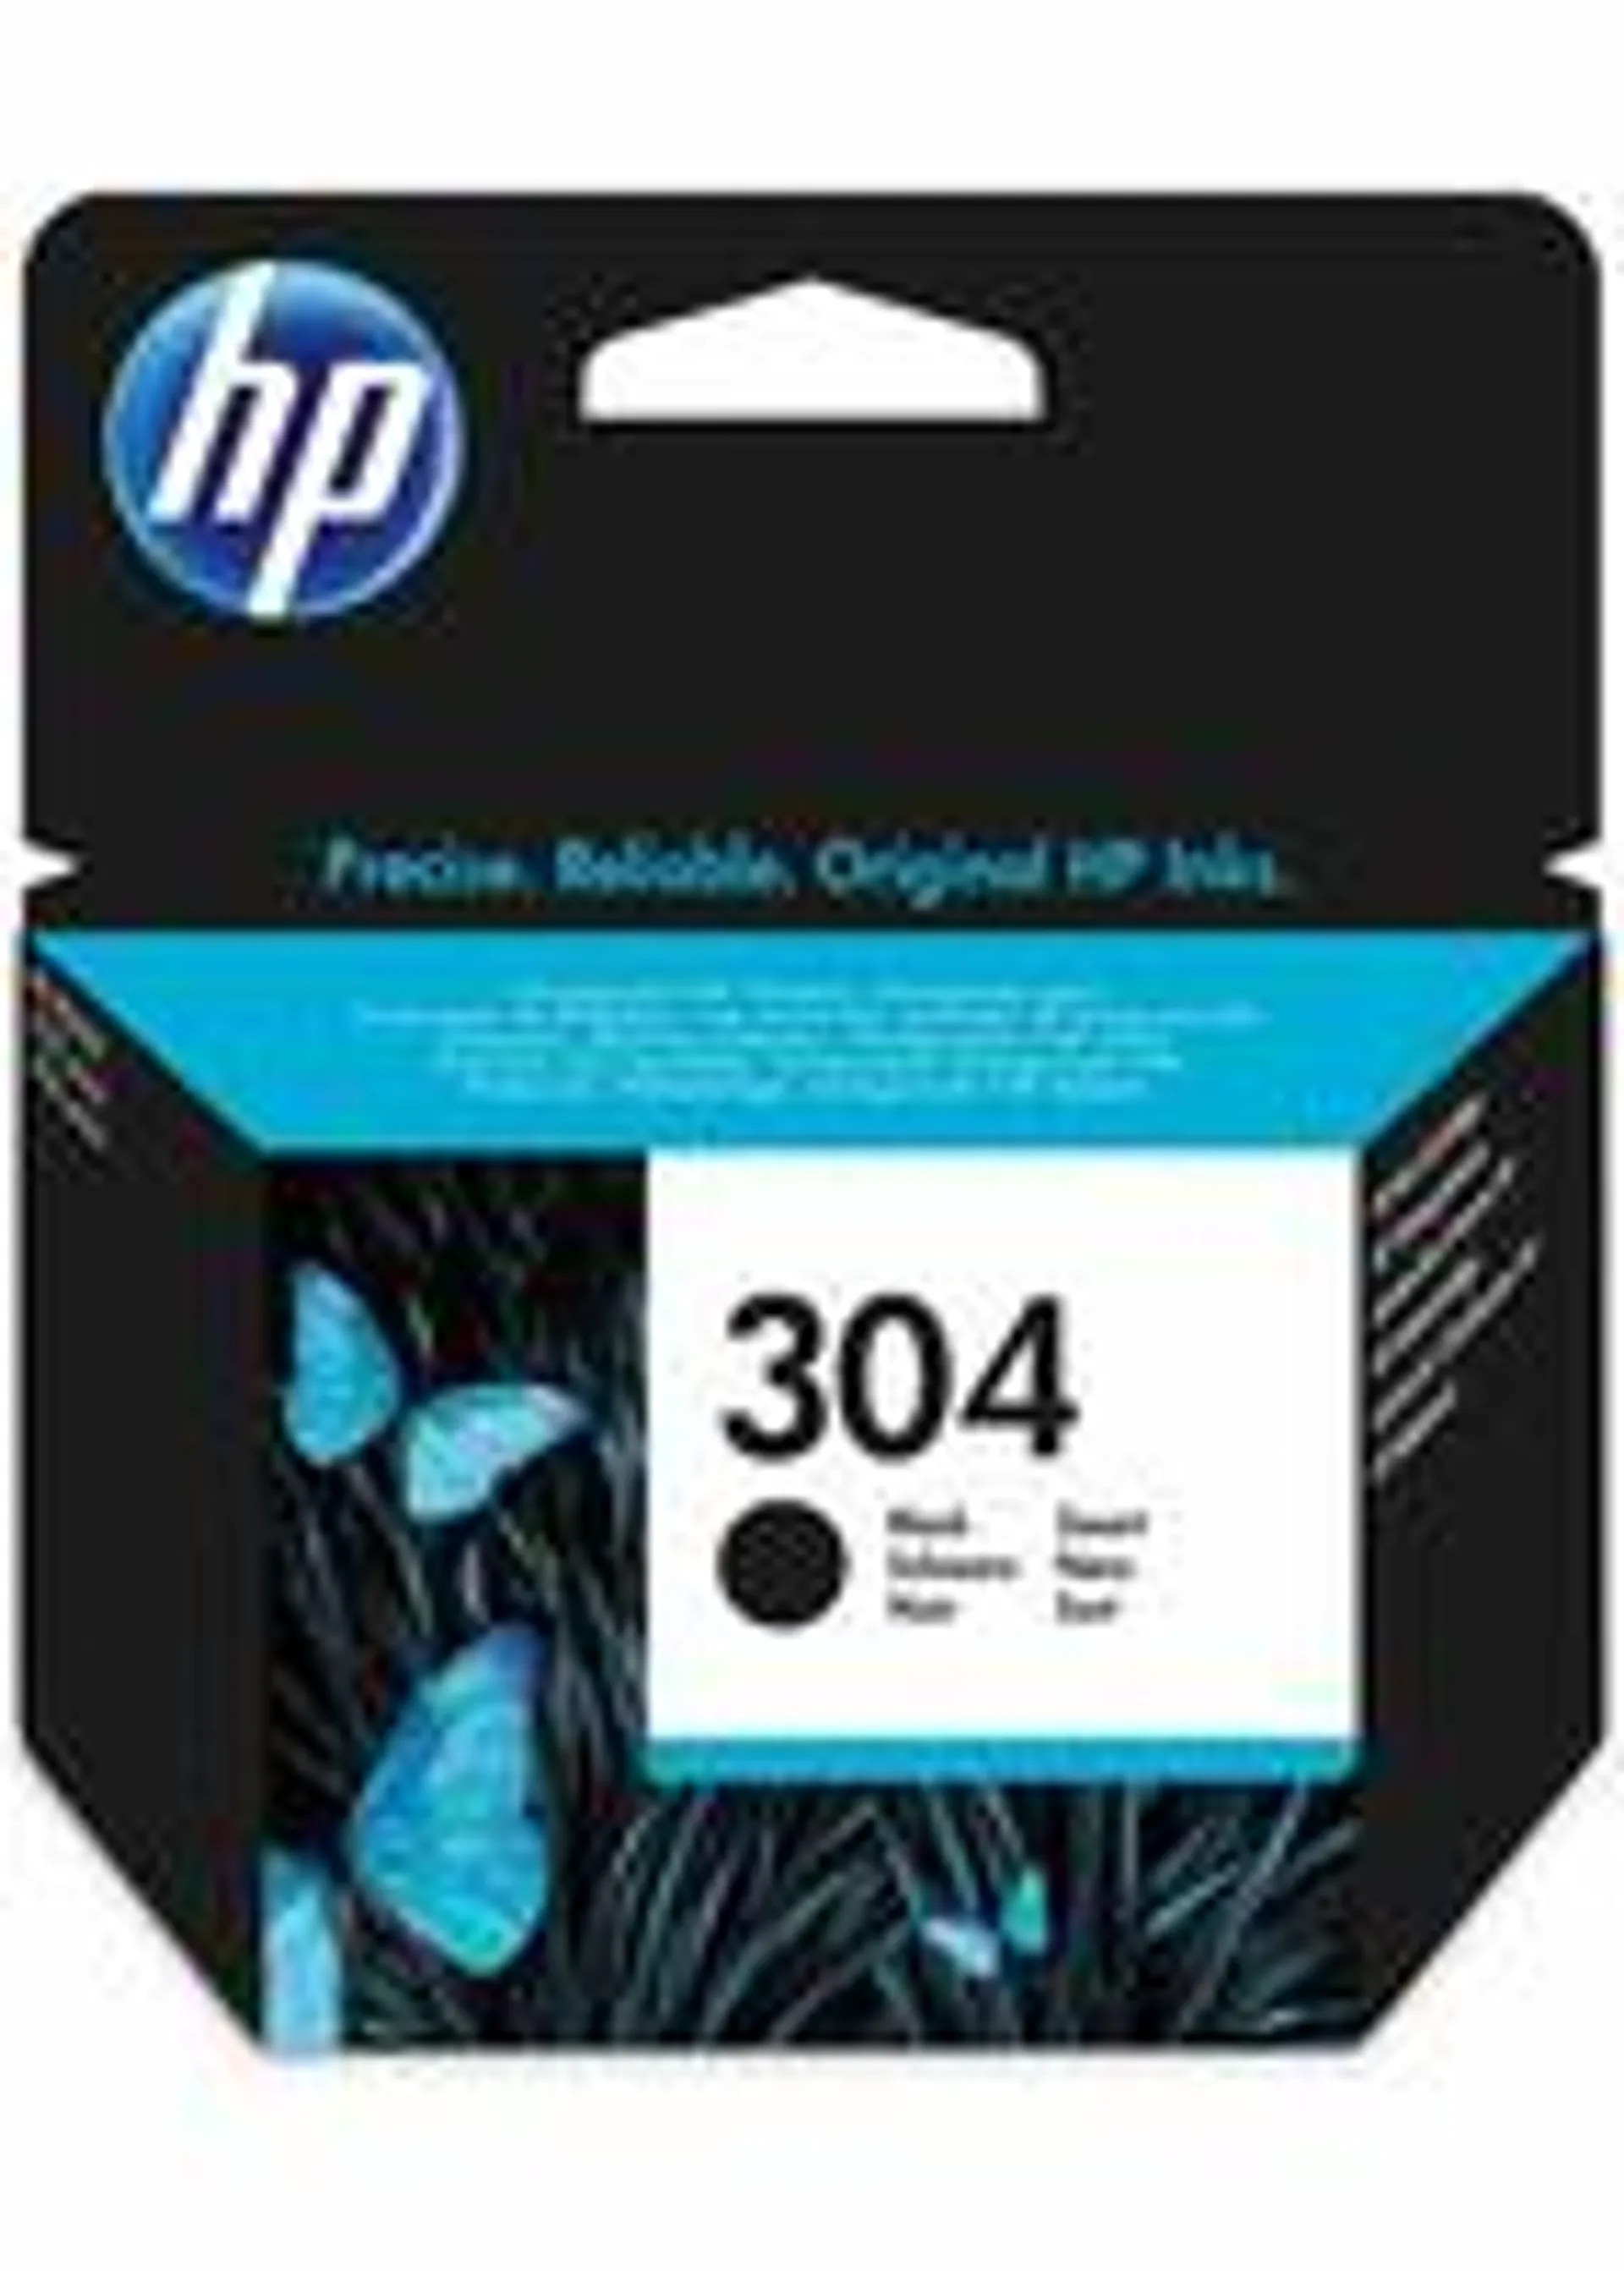 Buy 1 Get 1 Half Price Printer Ink